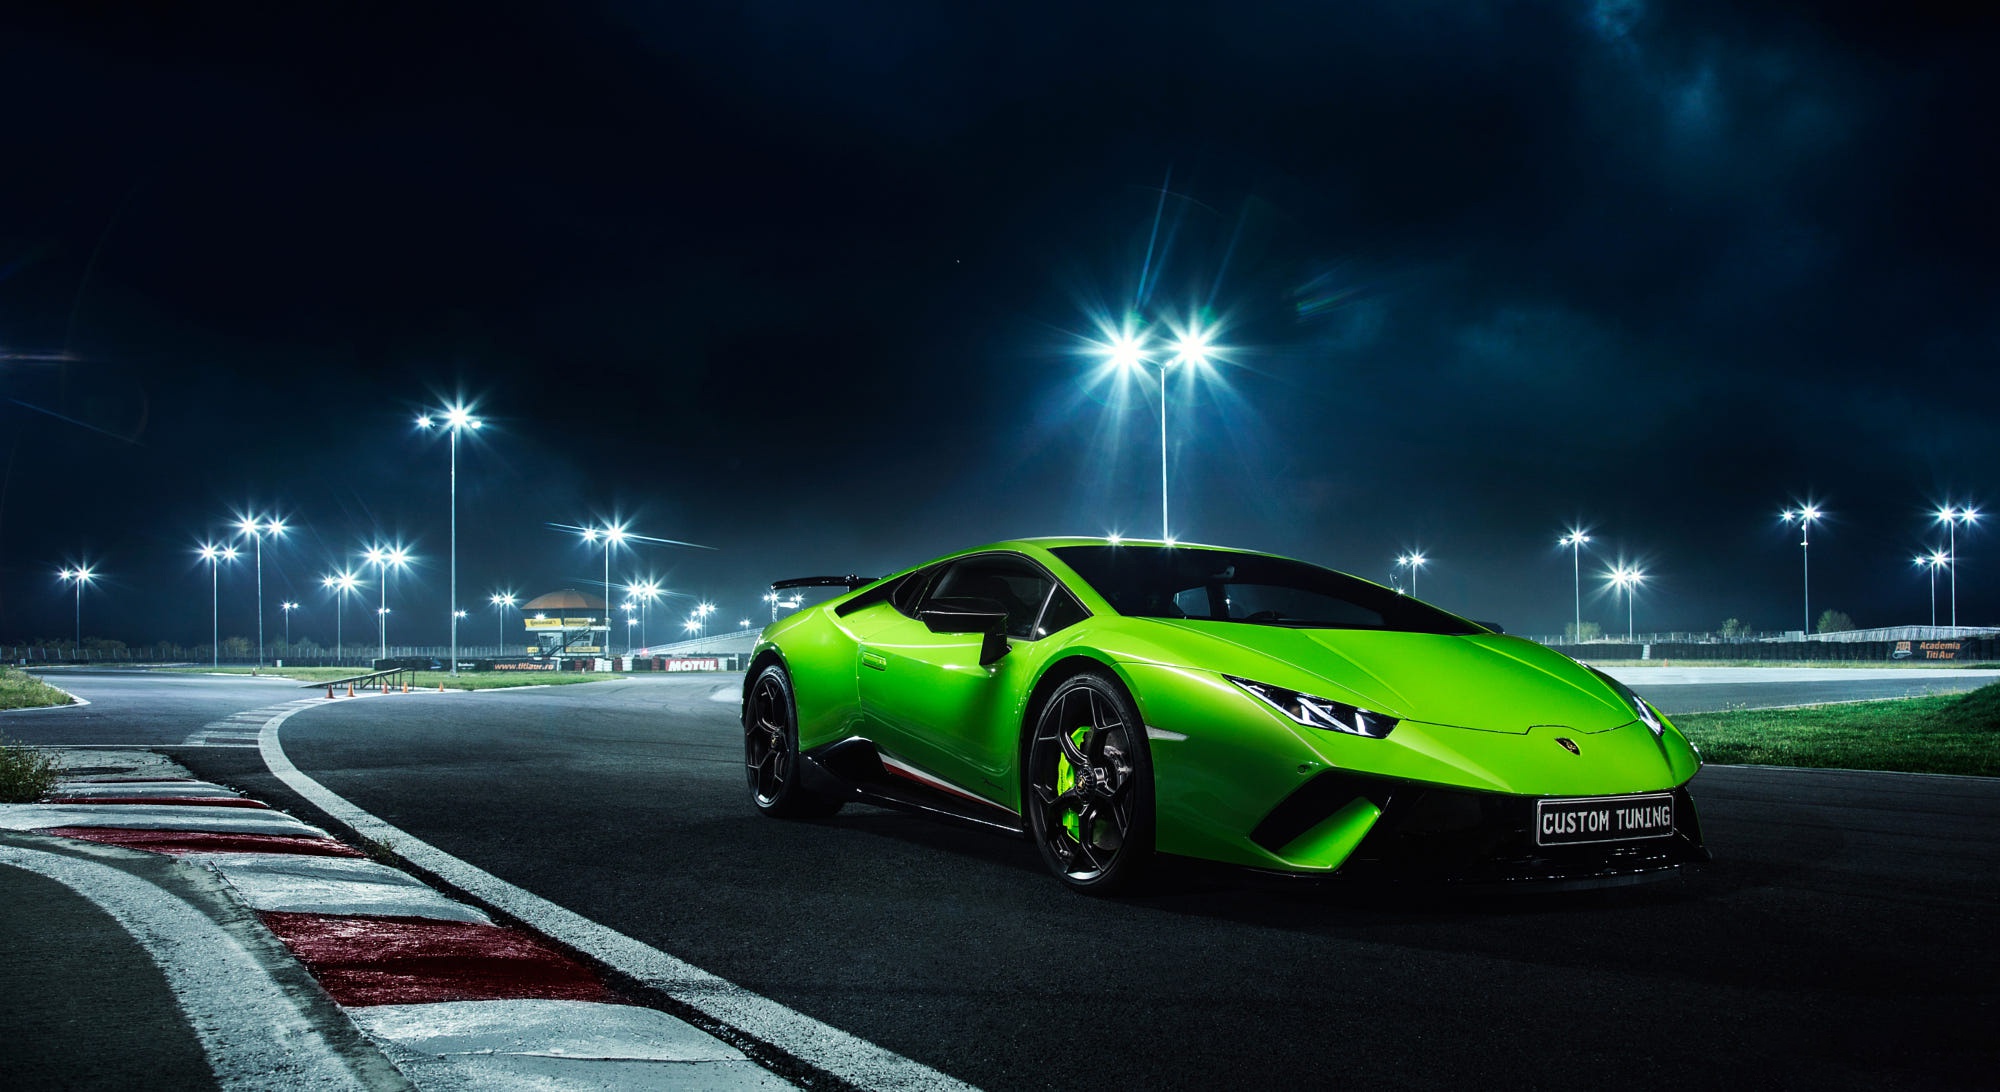 Скачать обои Lamborghini Huracan Performance на телефон бесплатно